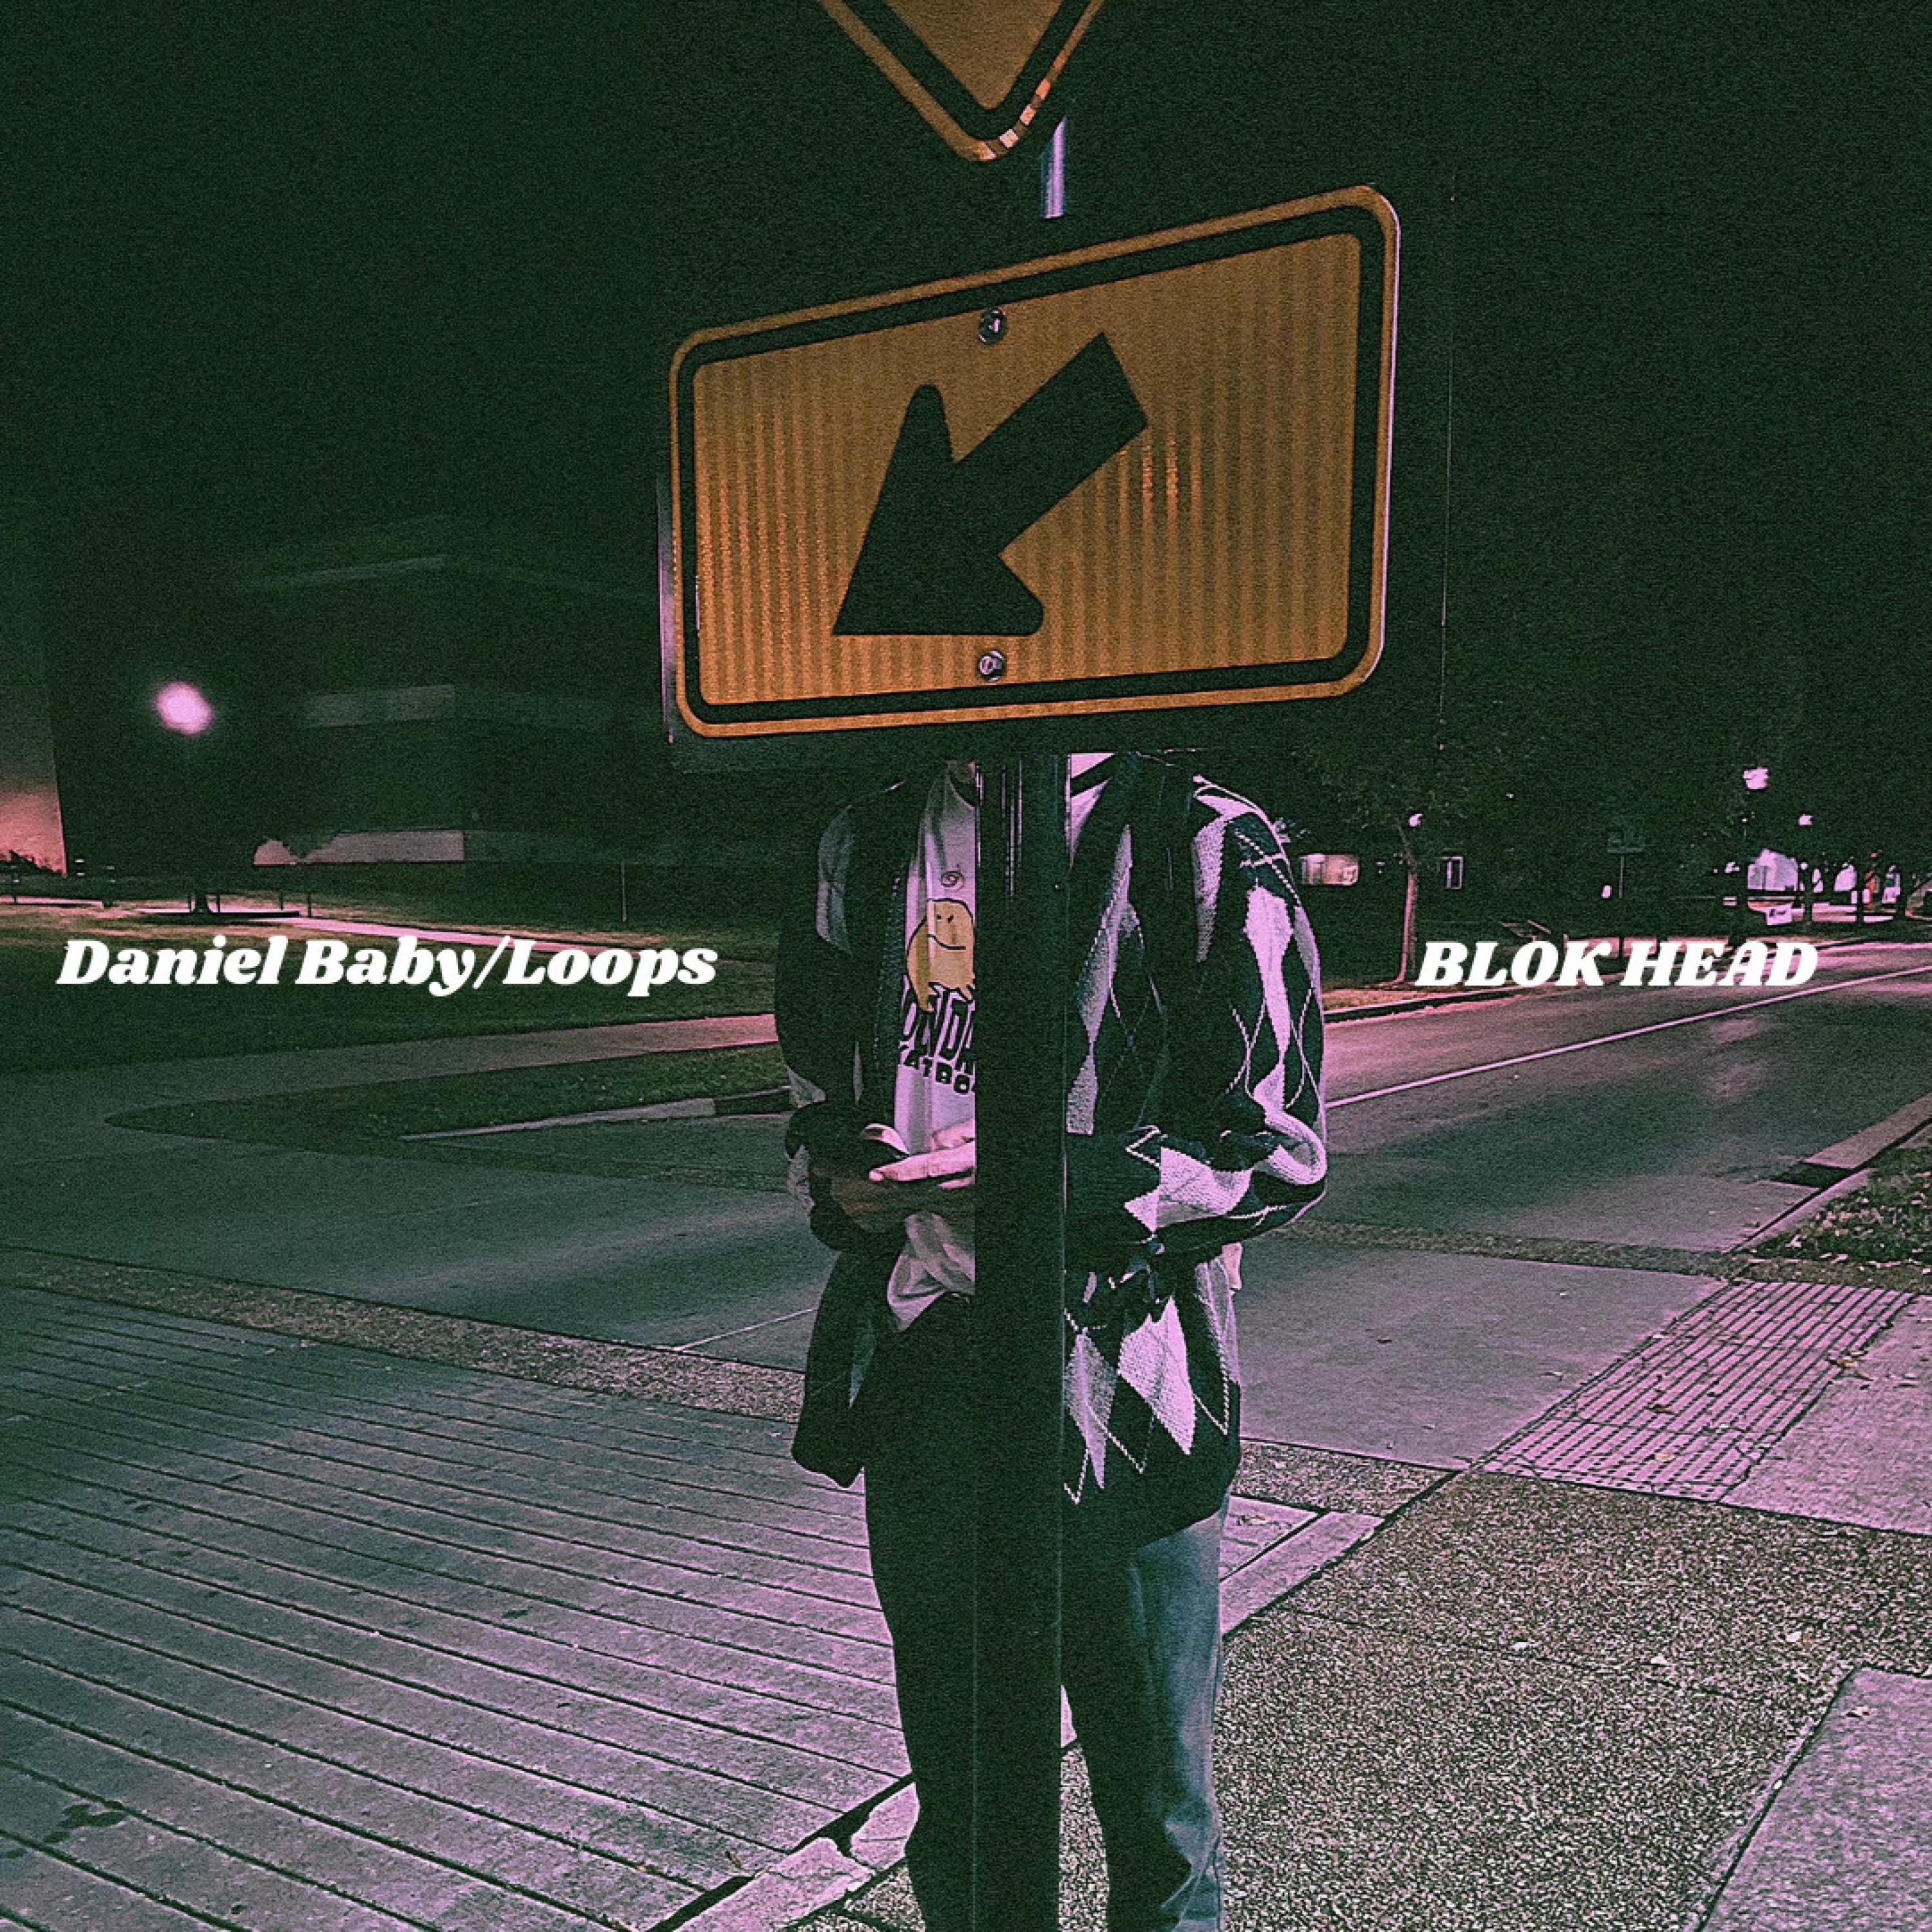 Blokhead - Daniel Baby/Loops (feat. Raul Clark & strawbs)